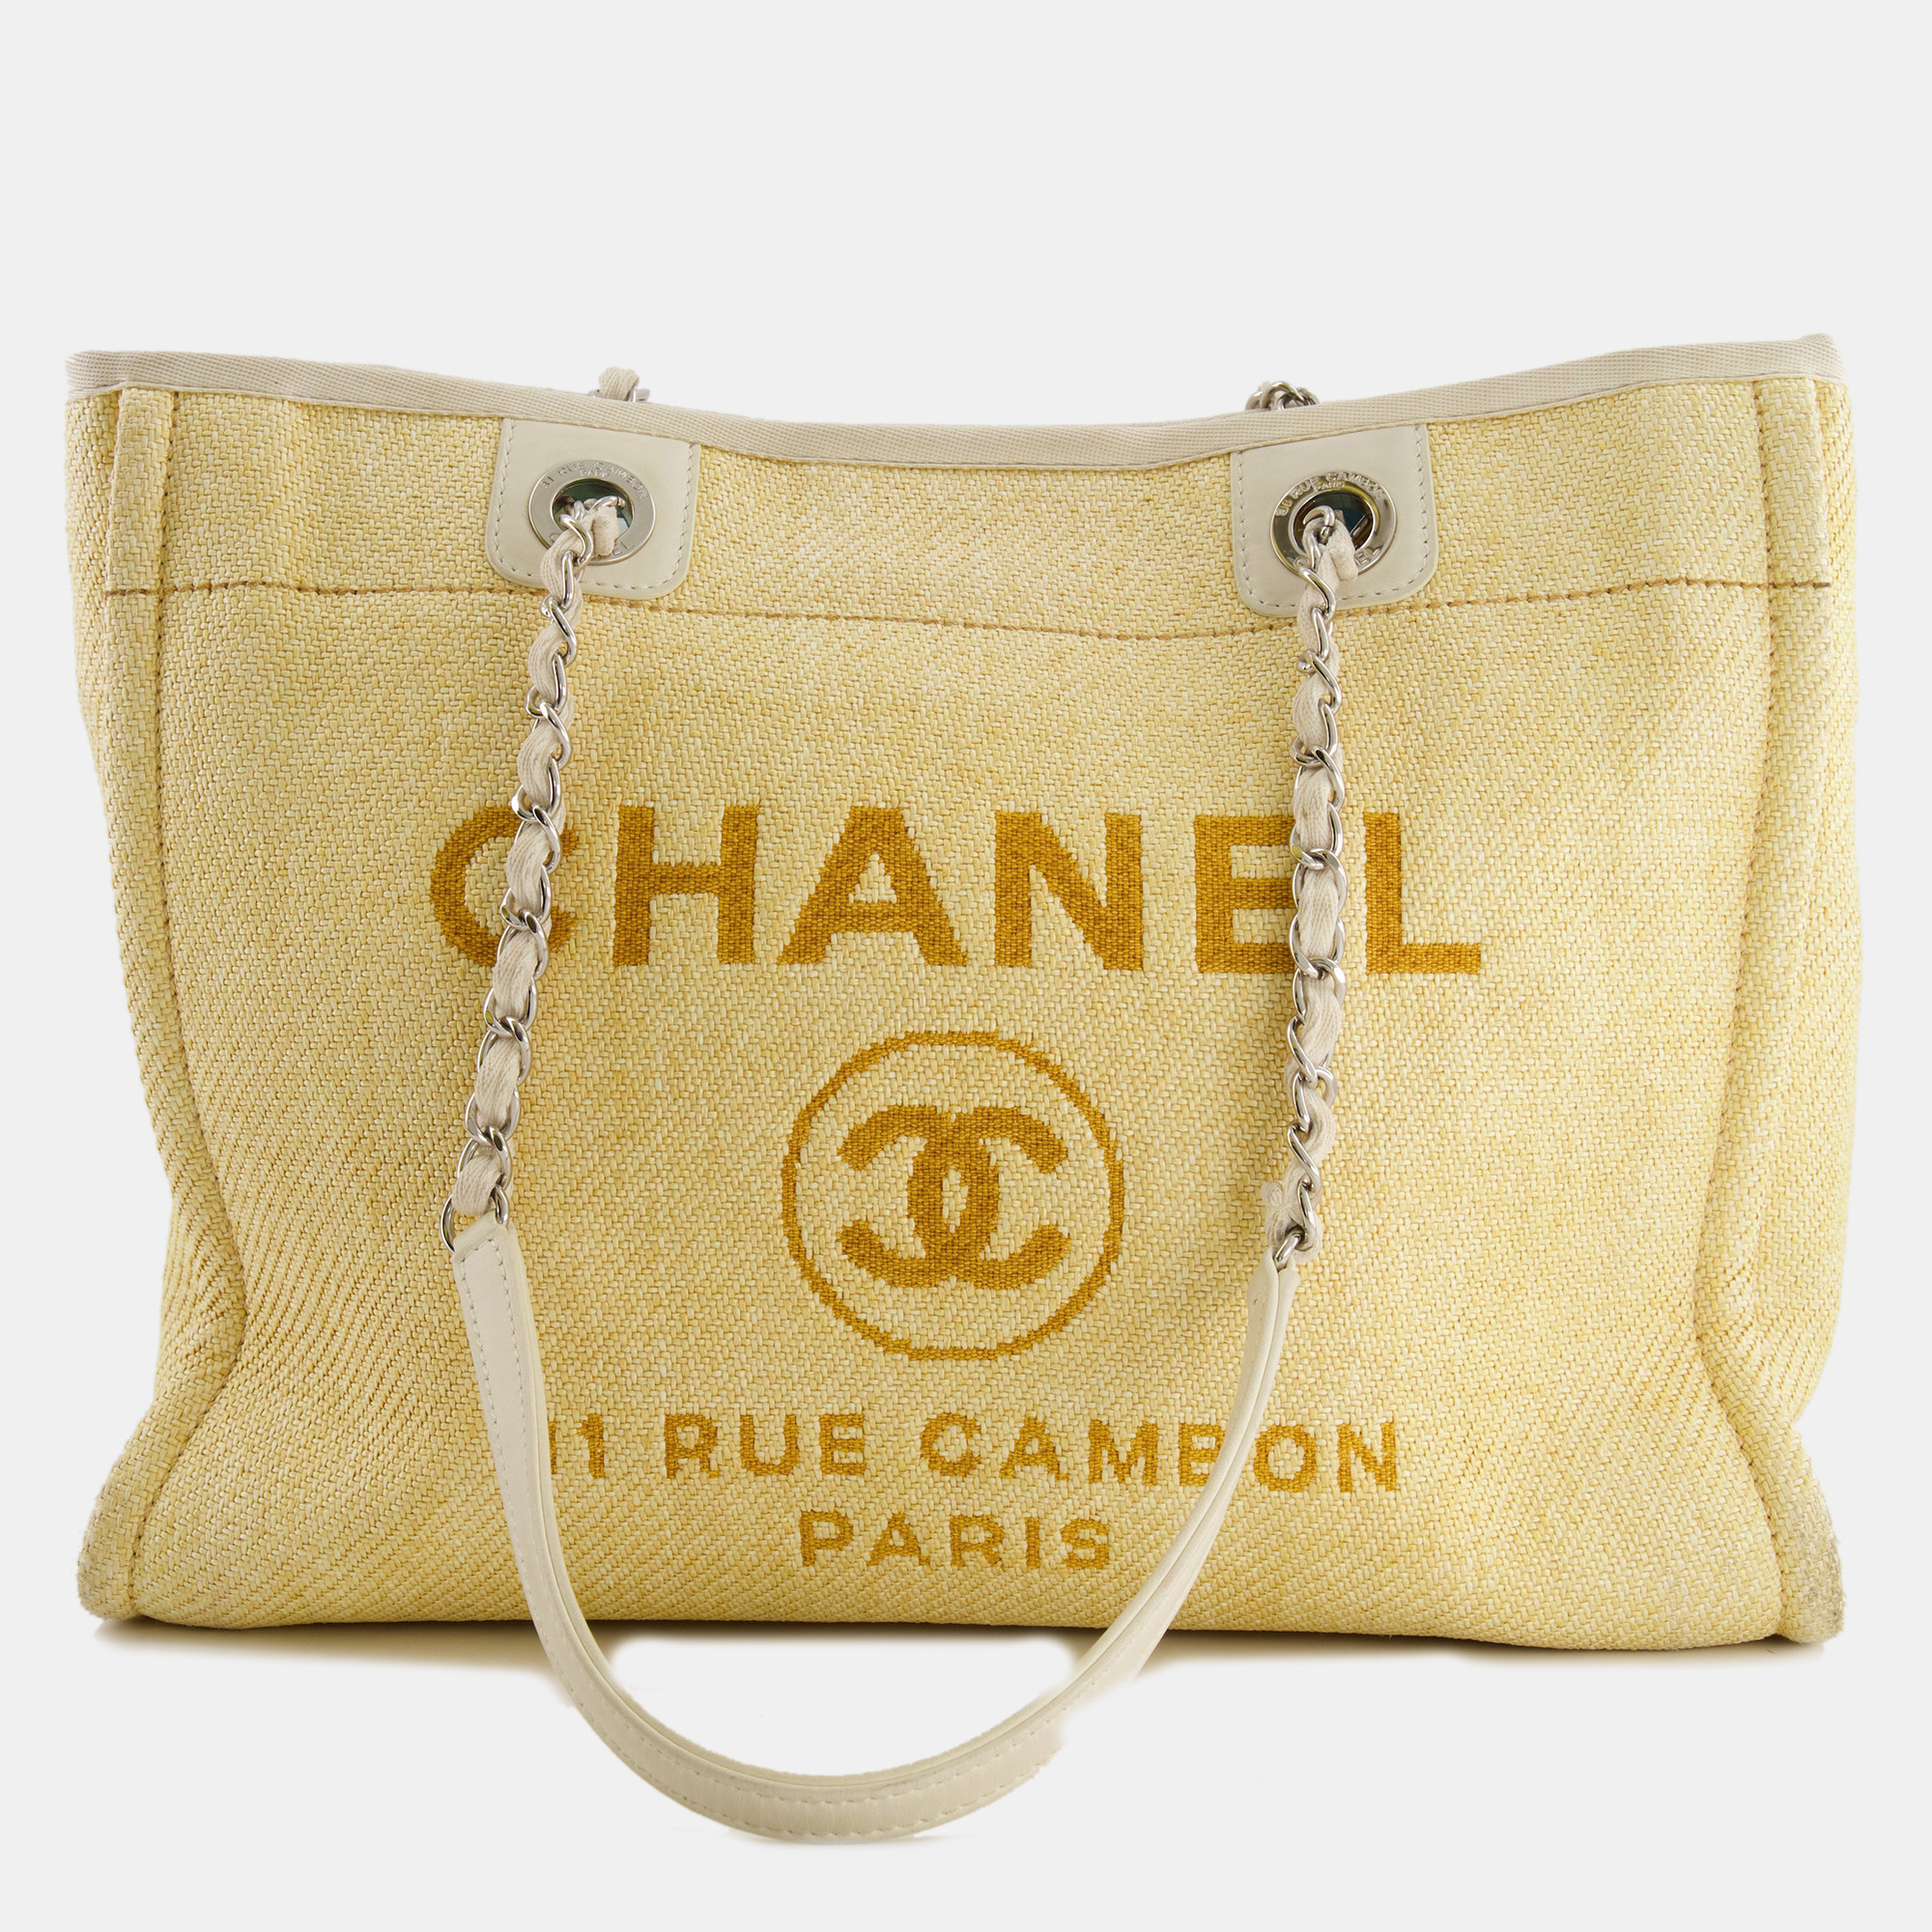 Chanel yellow raffia small deauville tote bag with silver hardware